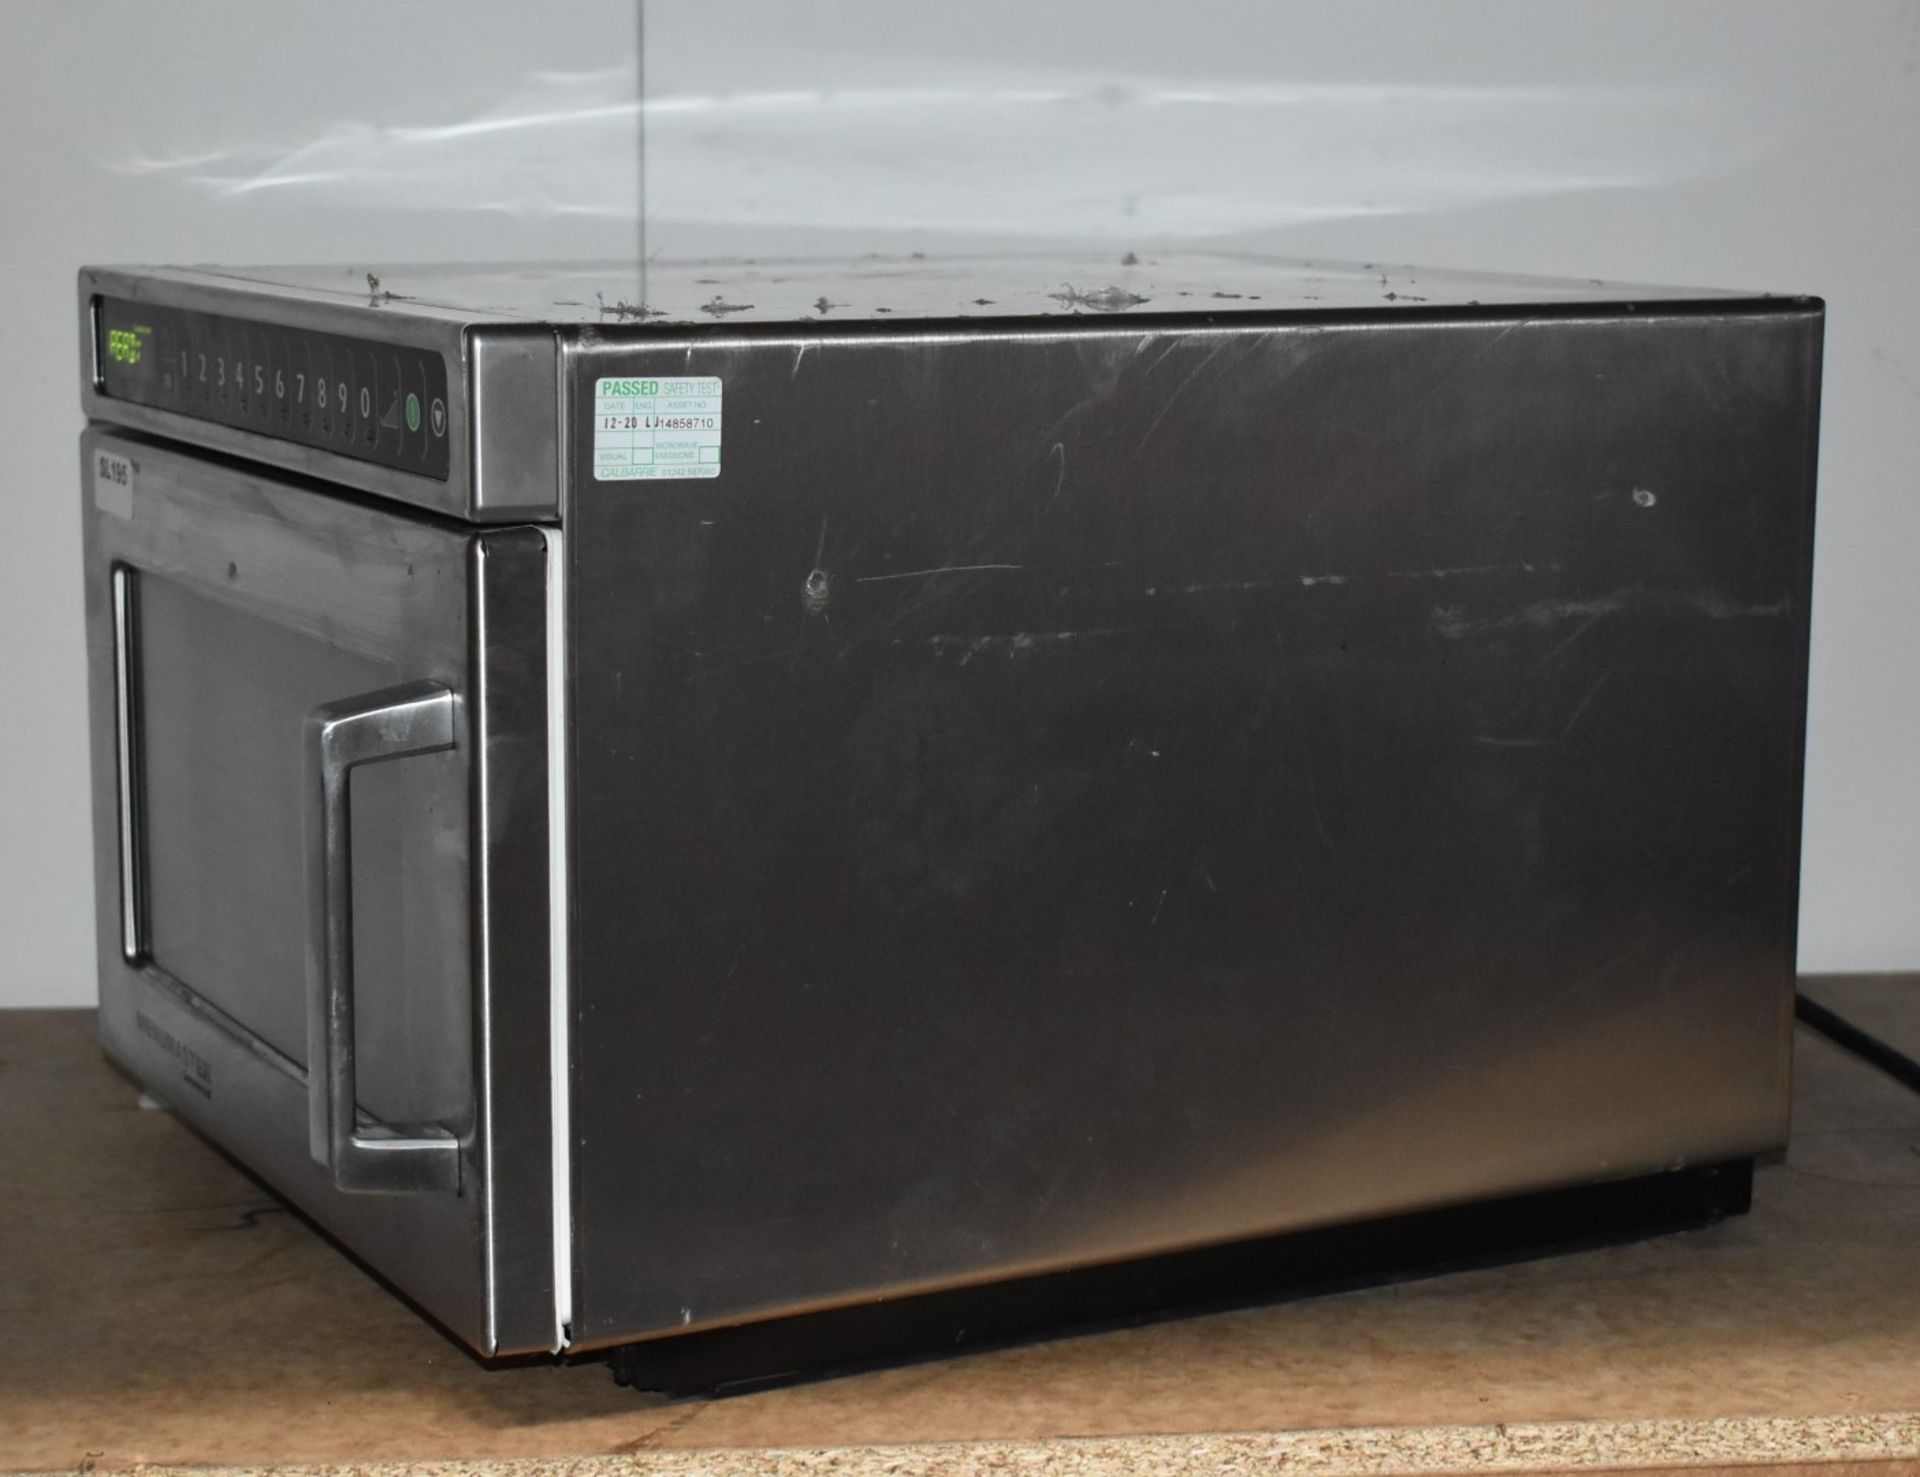 1 x Menumaster Commercial Microwave Oven - Model DEC14E2U - 1.4kW, 13A, 17Ltr - 2018 Model - - Image 7 of 12